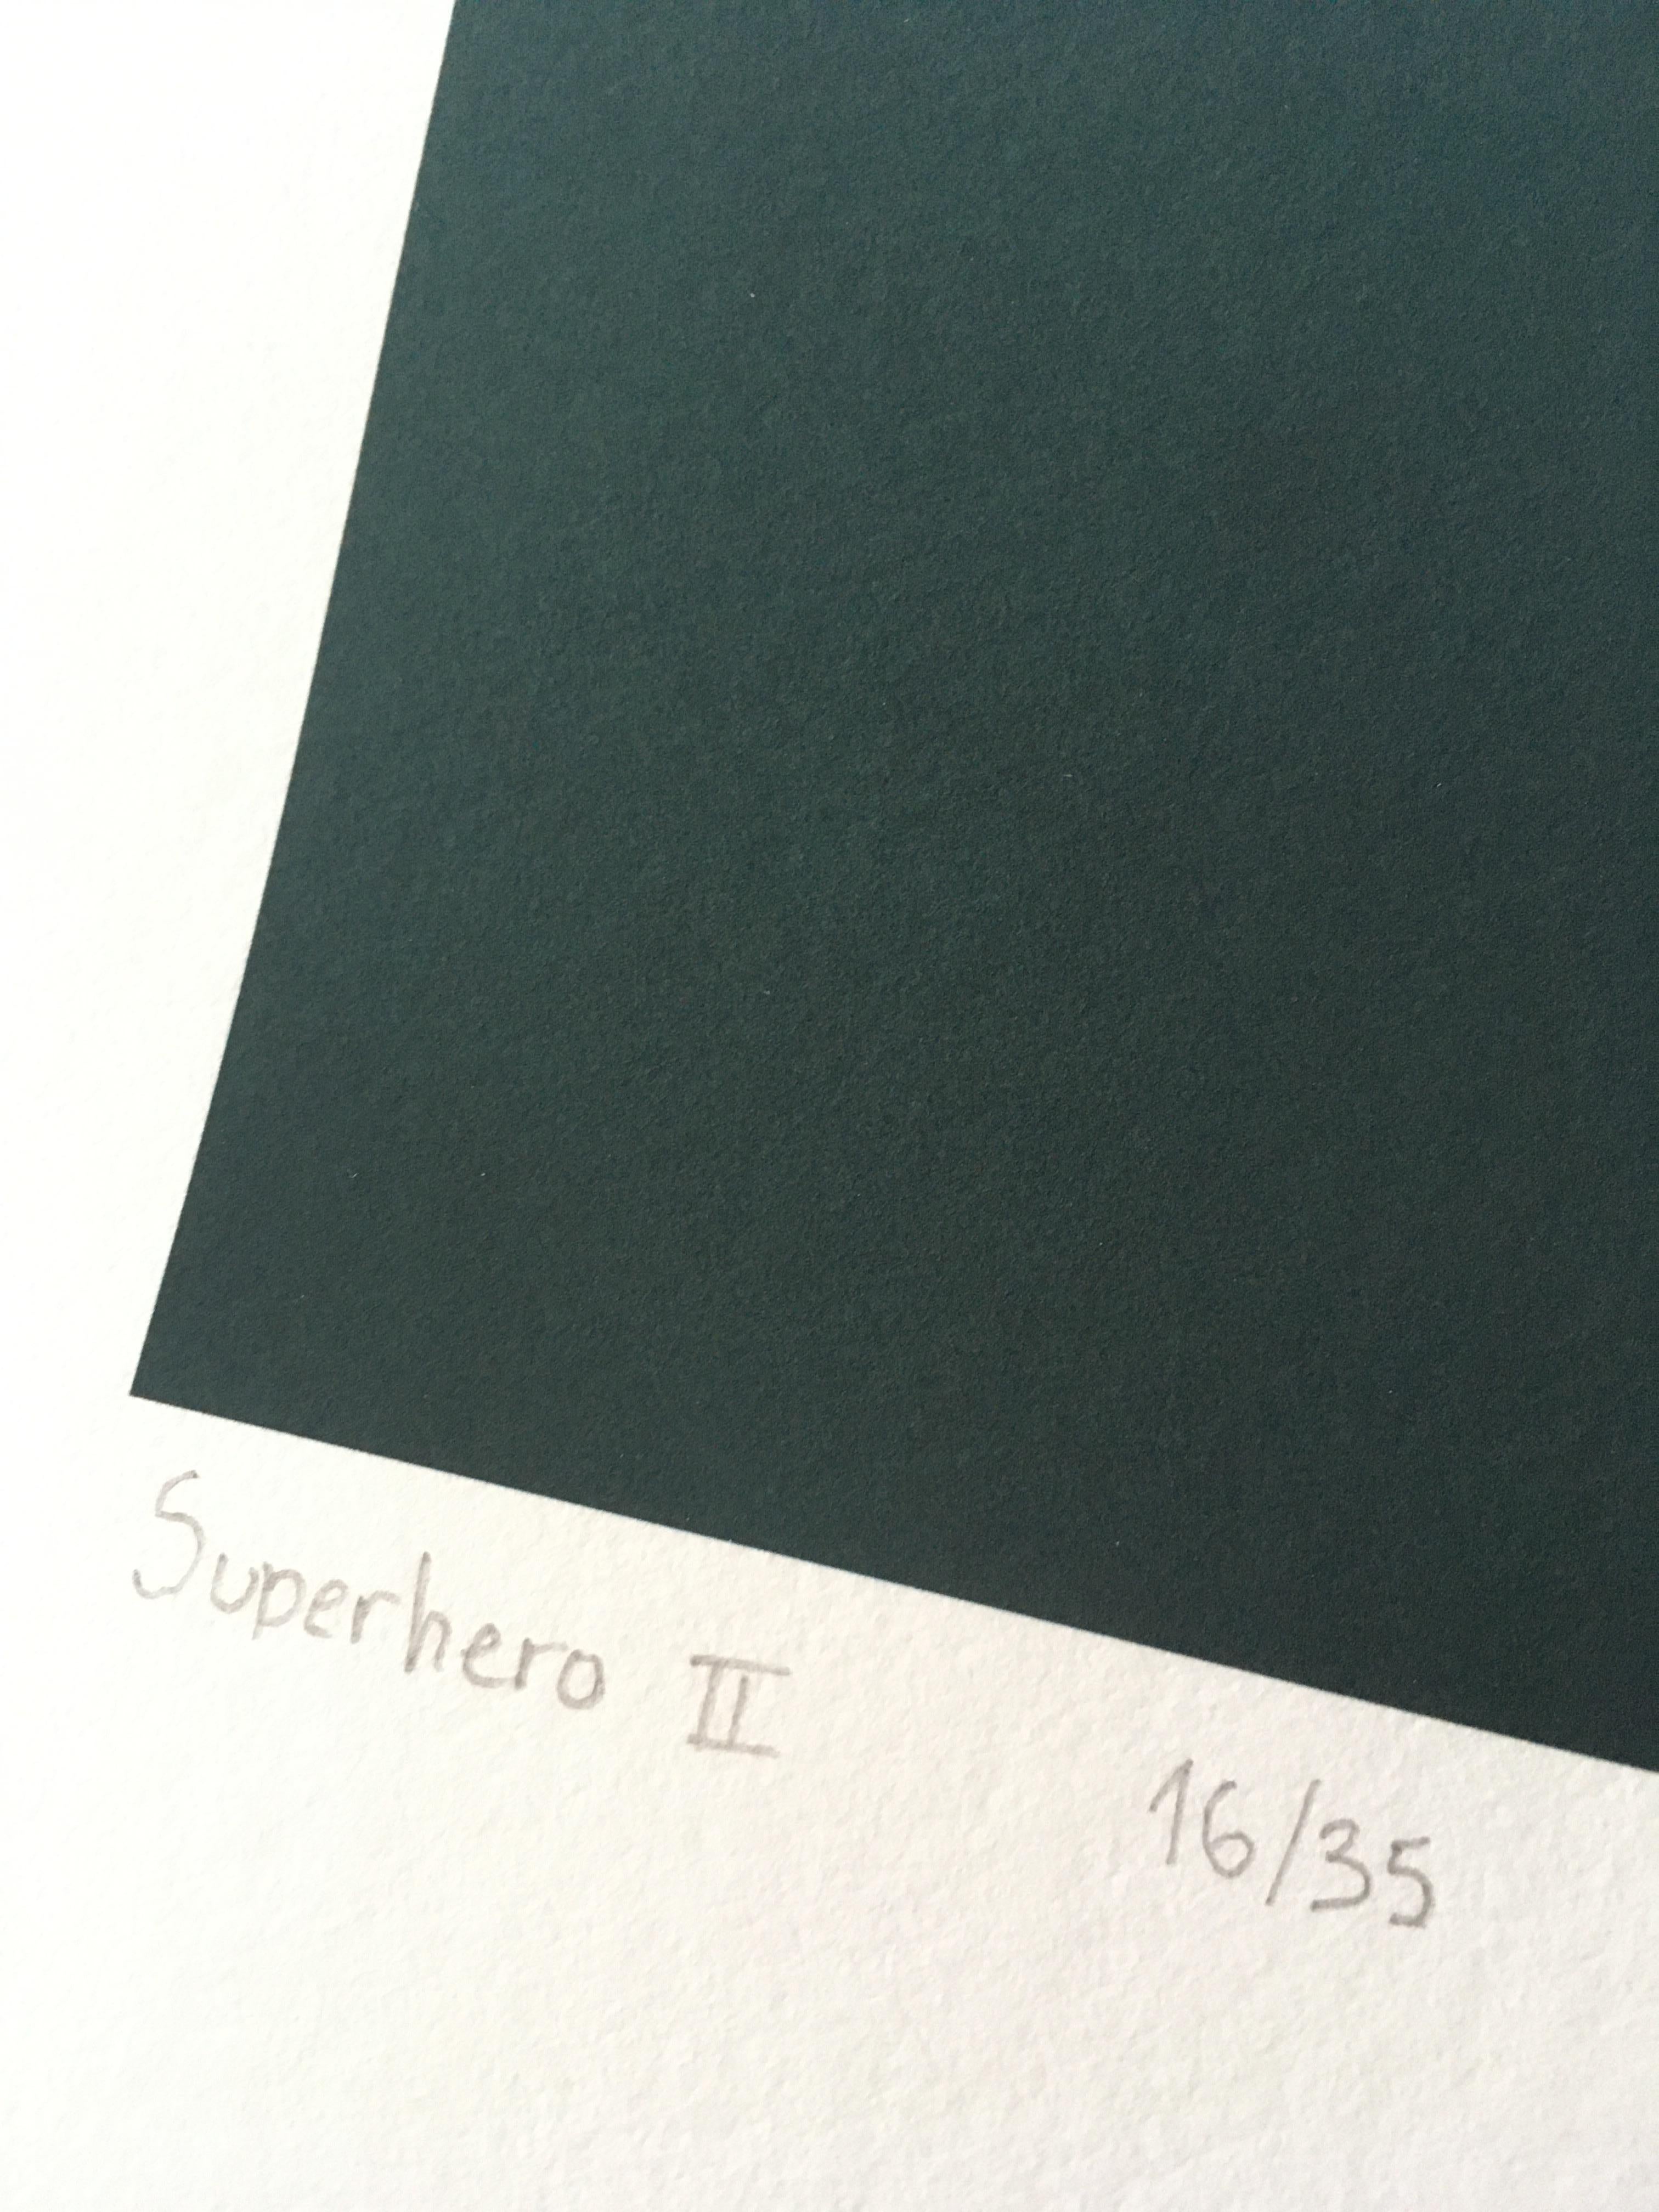 Superhero II - Print by Delphine Lebourgeois